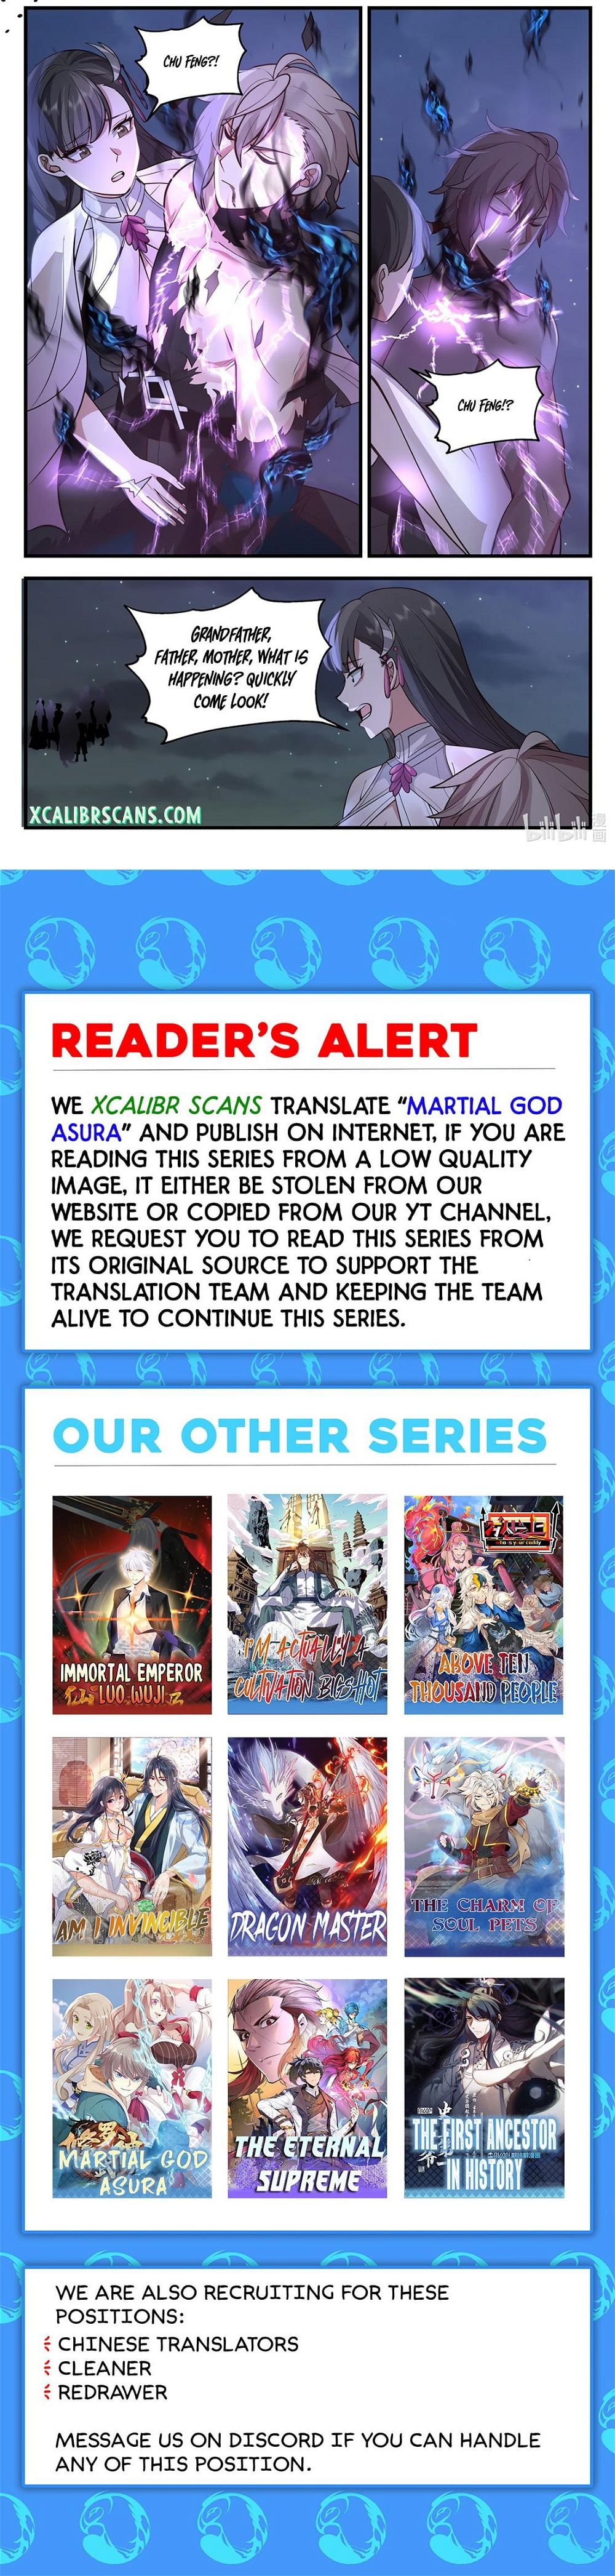 Martial God Asura Chapter 540 - Page 9